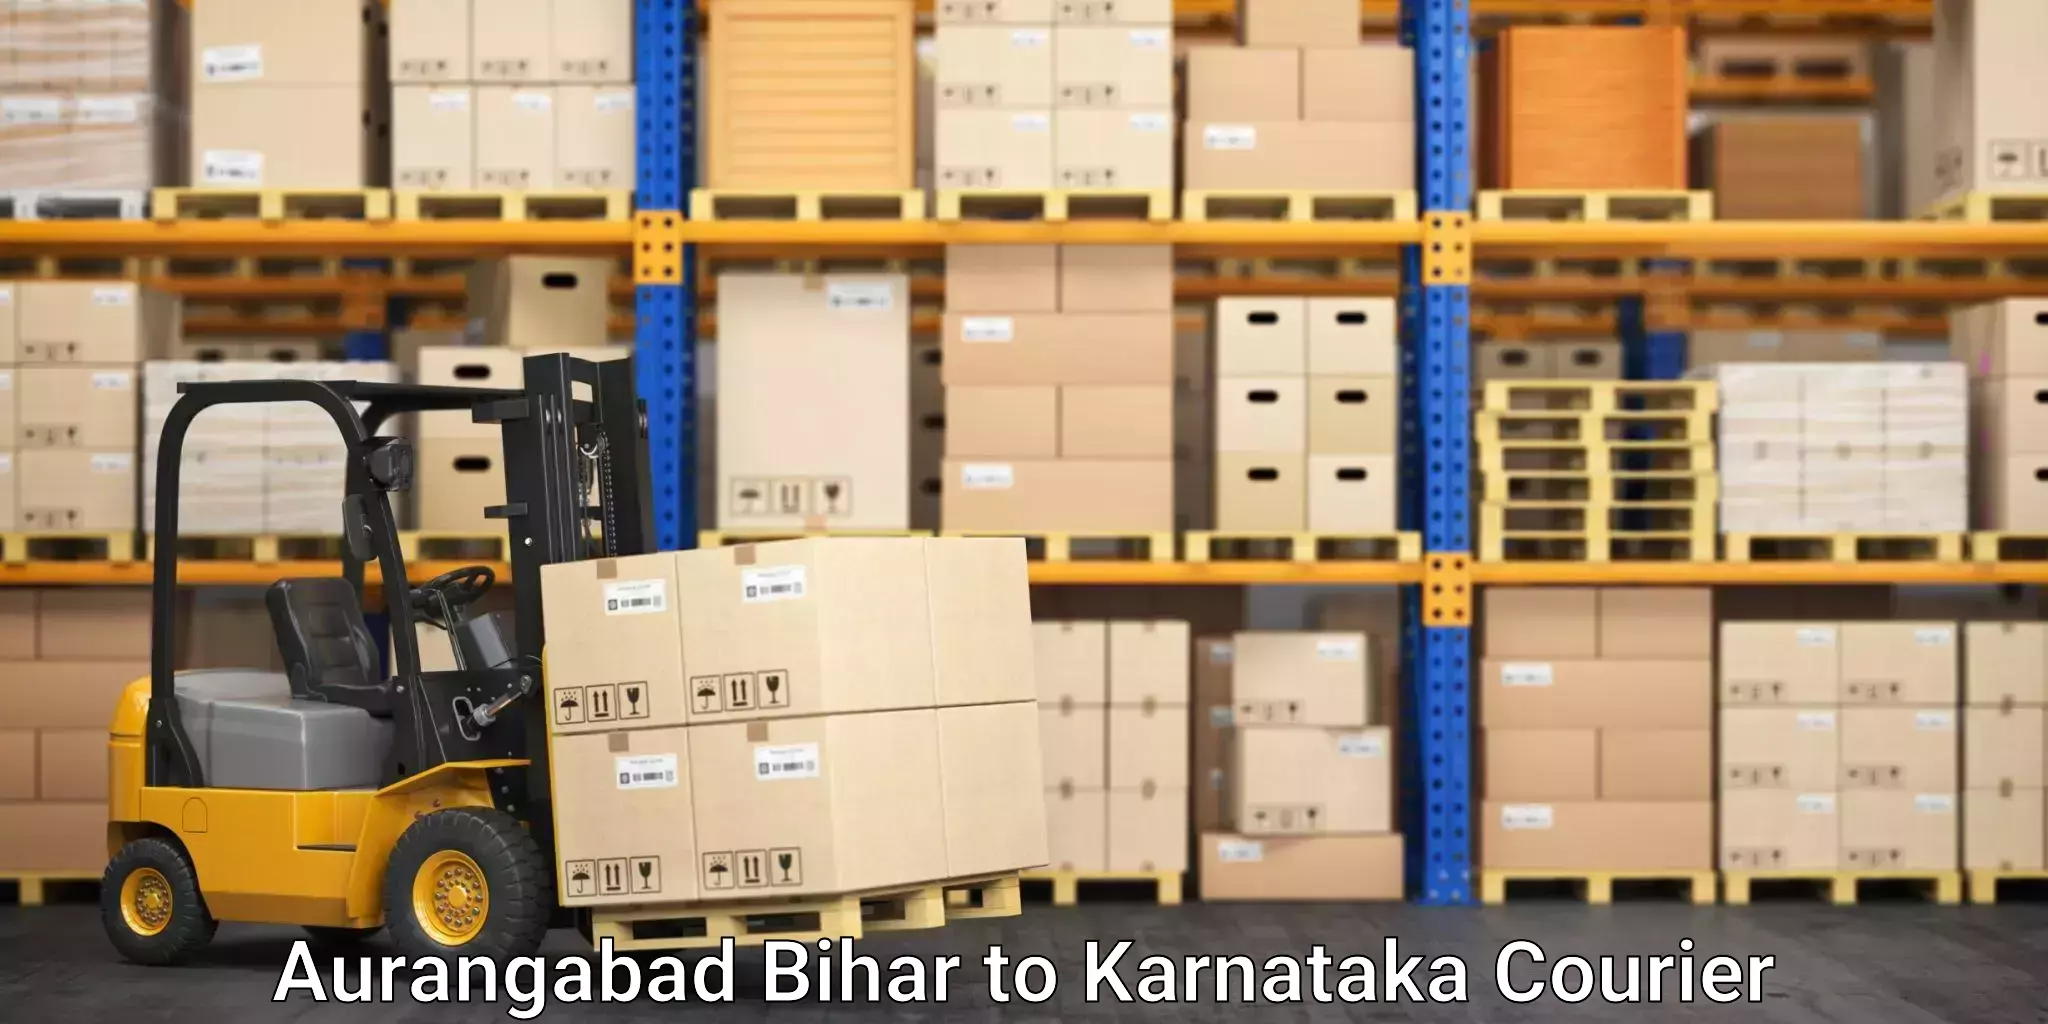 Expert furniture movers Aurangabad Bihar to Bellary